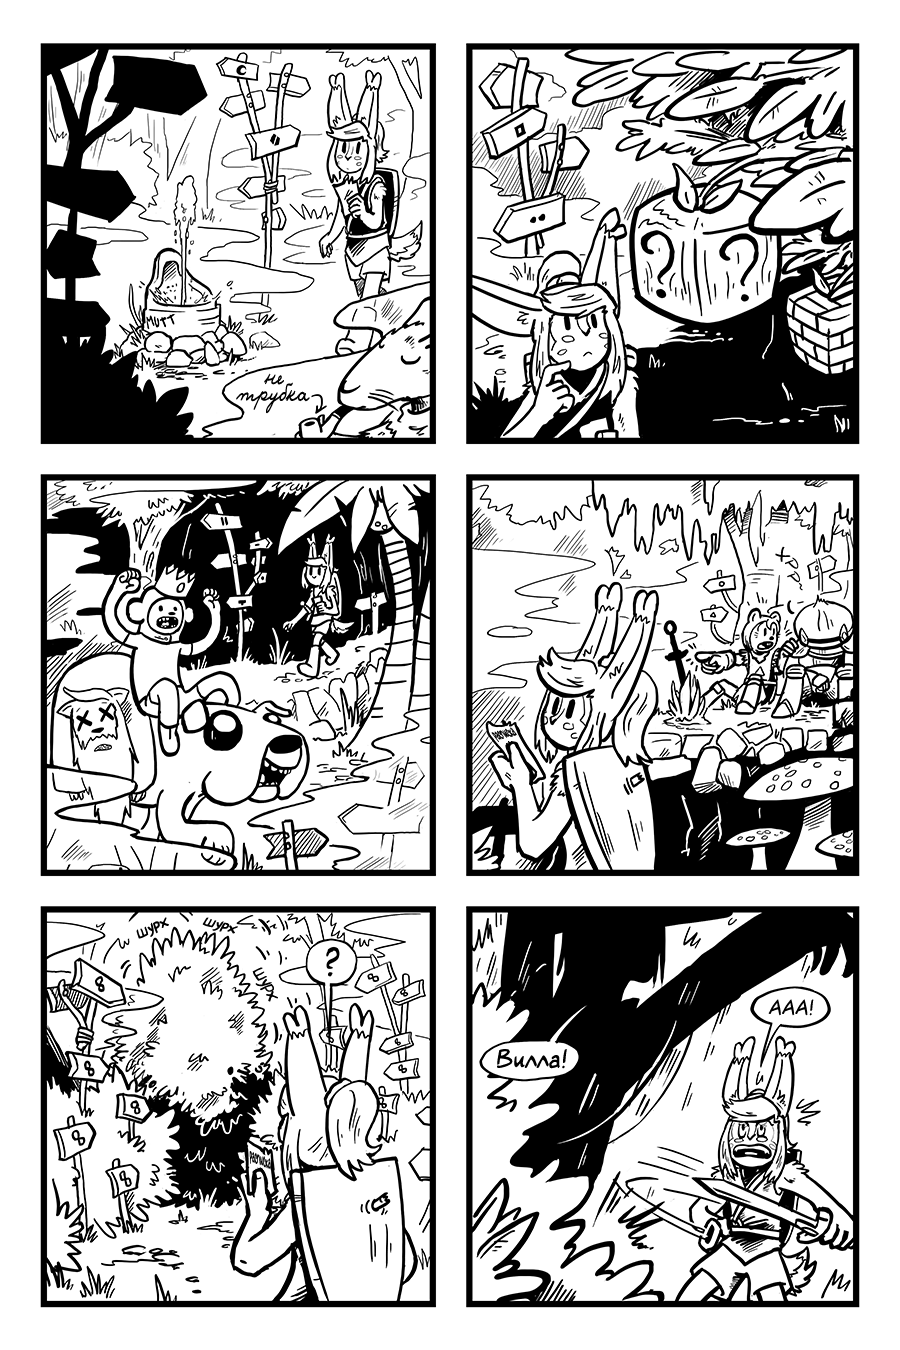 Комикс Беспризорное Царство [Latchkey Kingdom]: выпуск №155